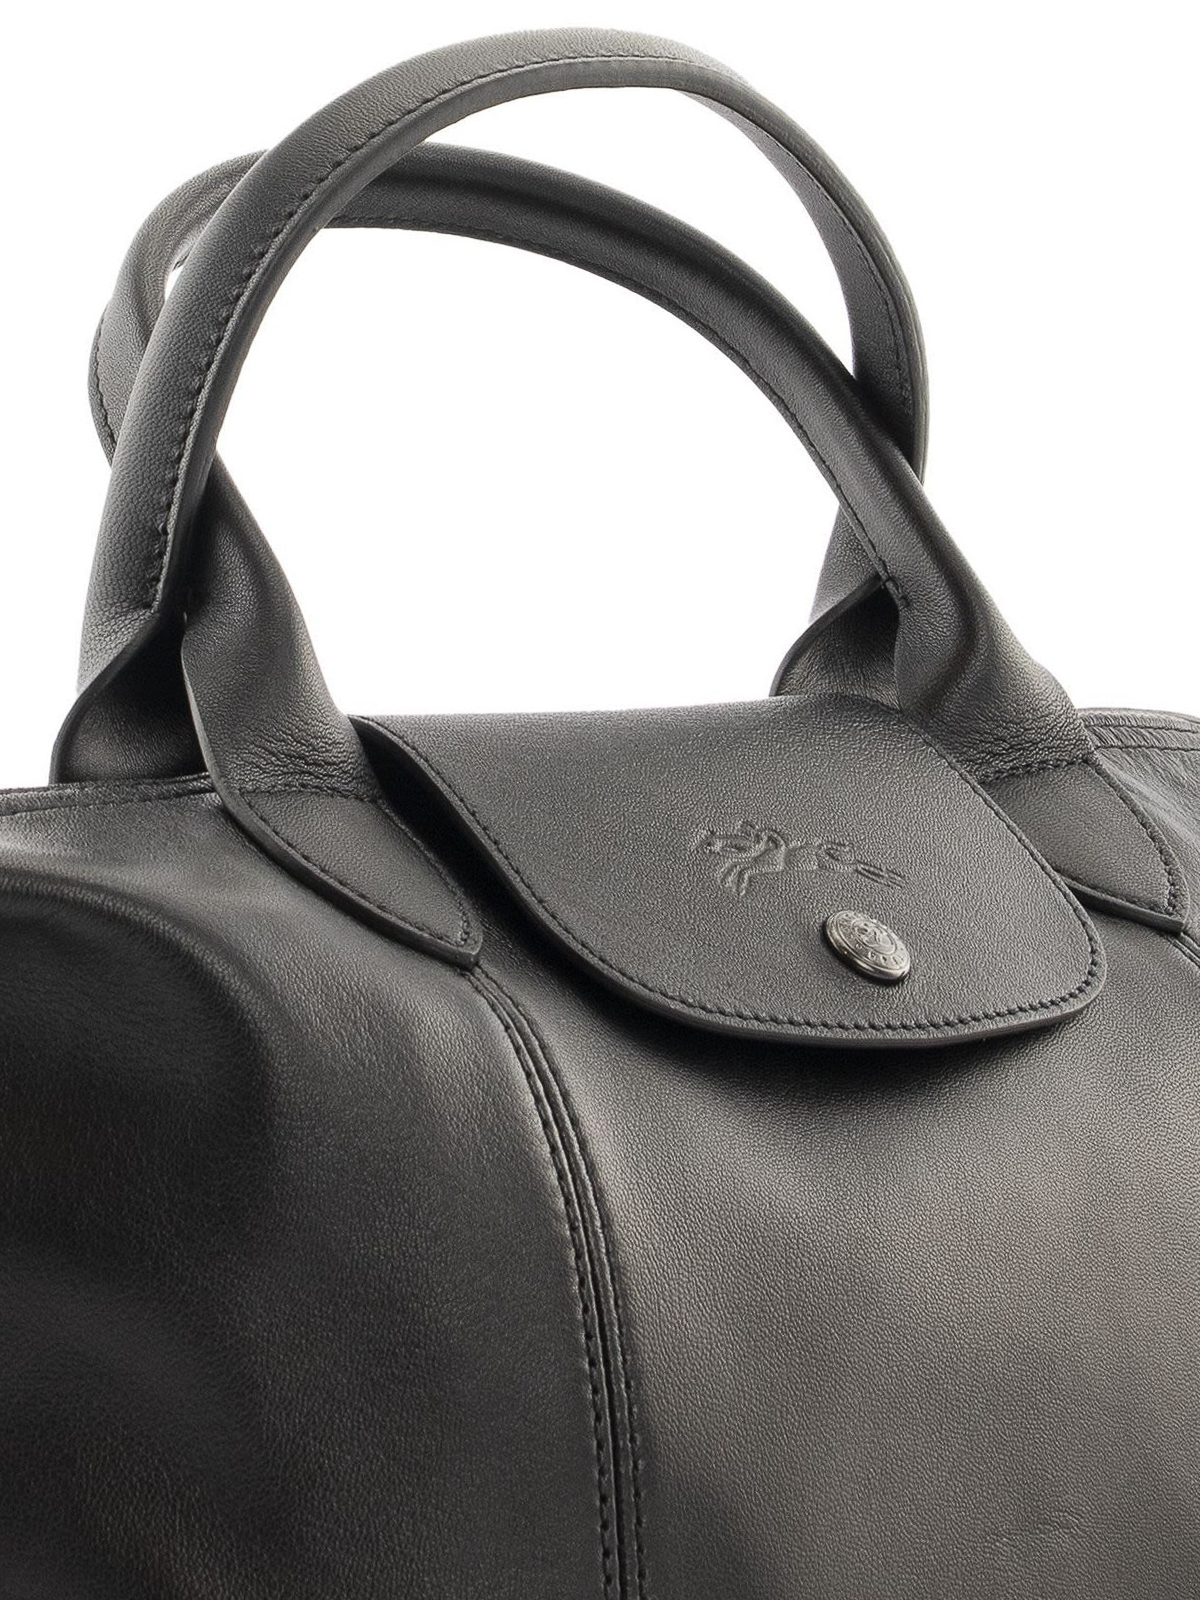 Buy Longchamp Le Pliage Cuir Top handle black leather. at